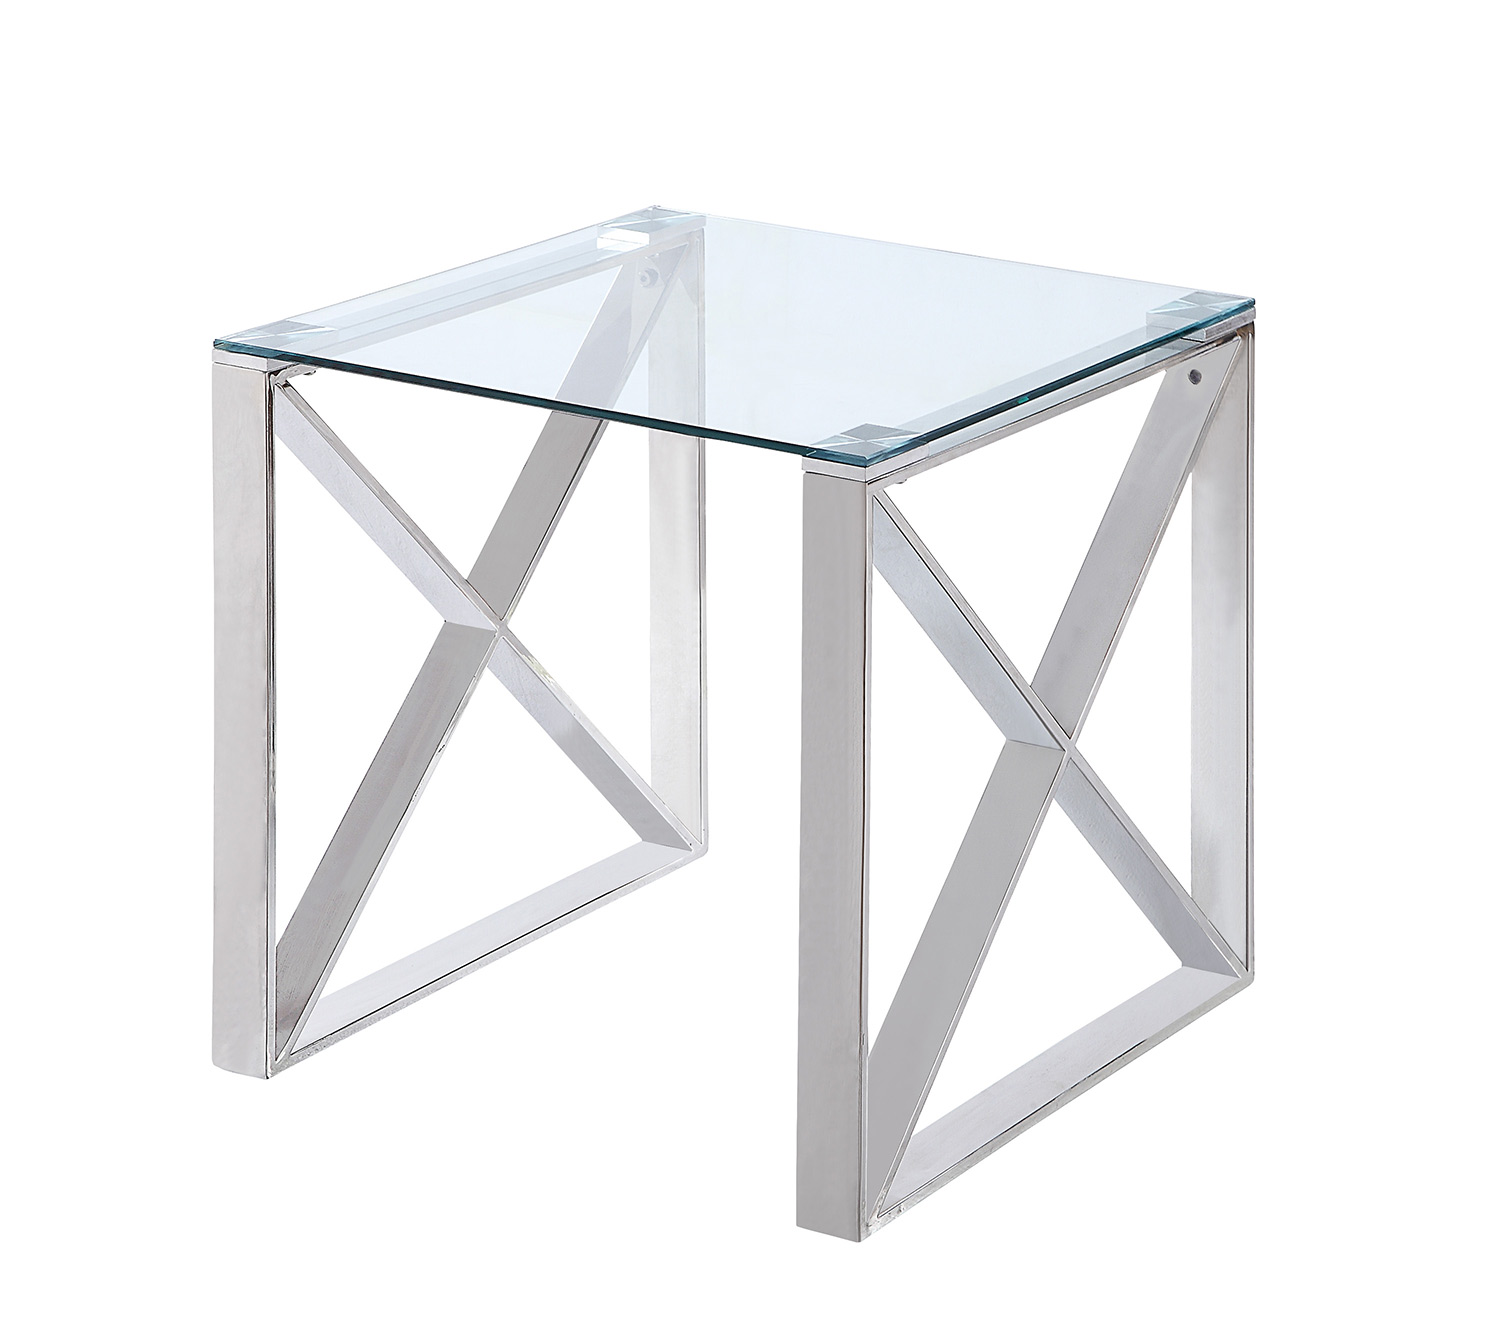 Homelegance Rush End Table with Glass Top - Polished Chrome